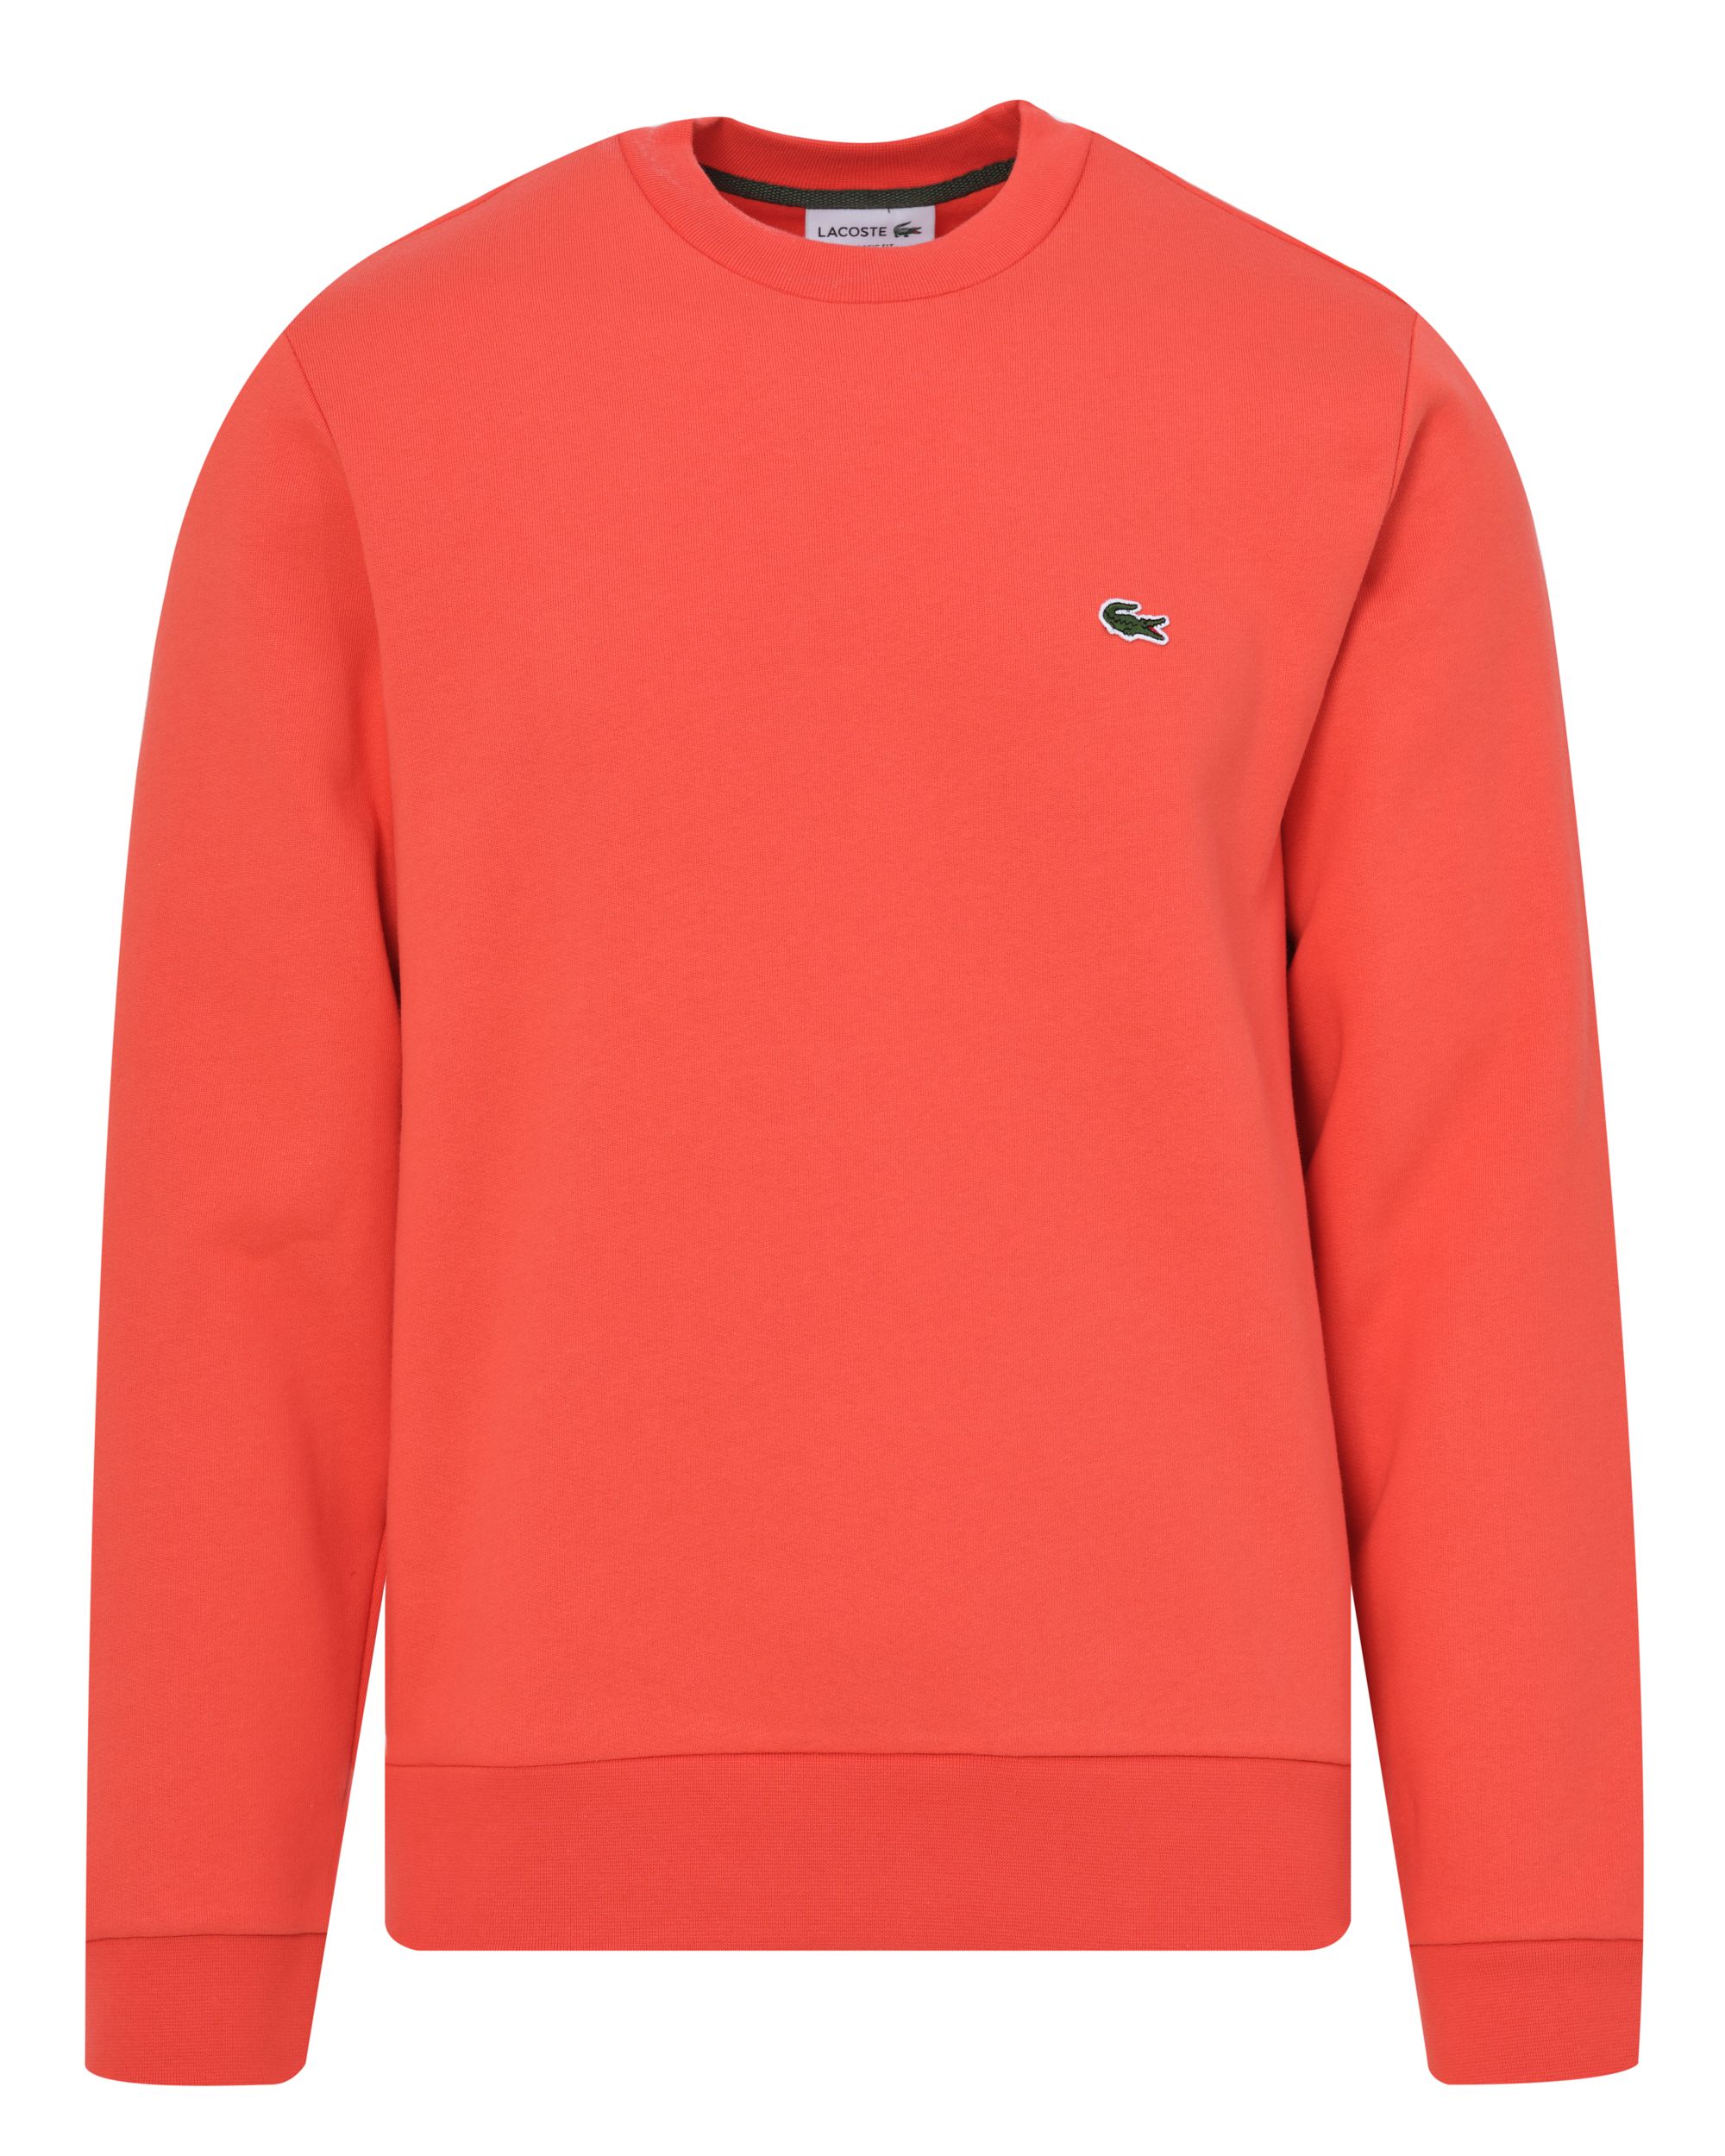 Lacoste Sweater Oranje 084074-001-L